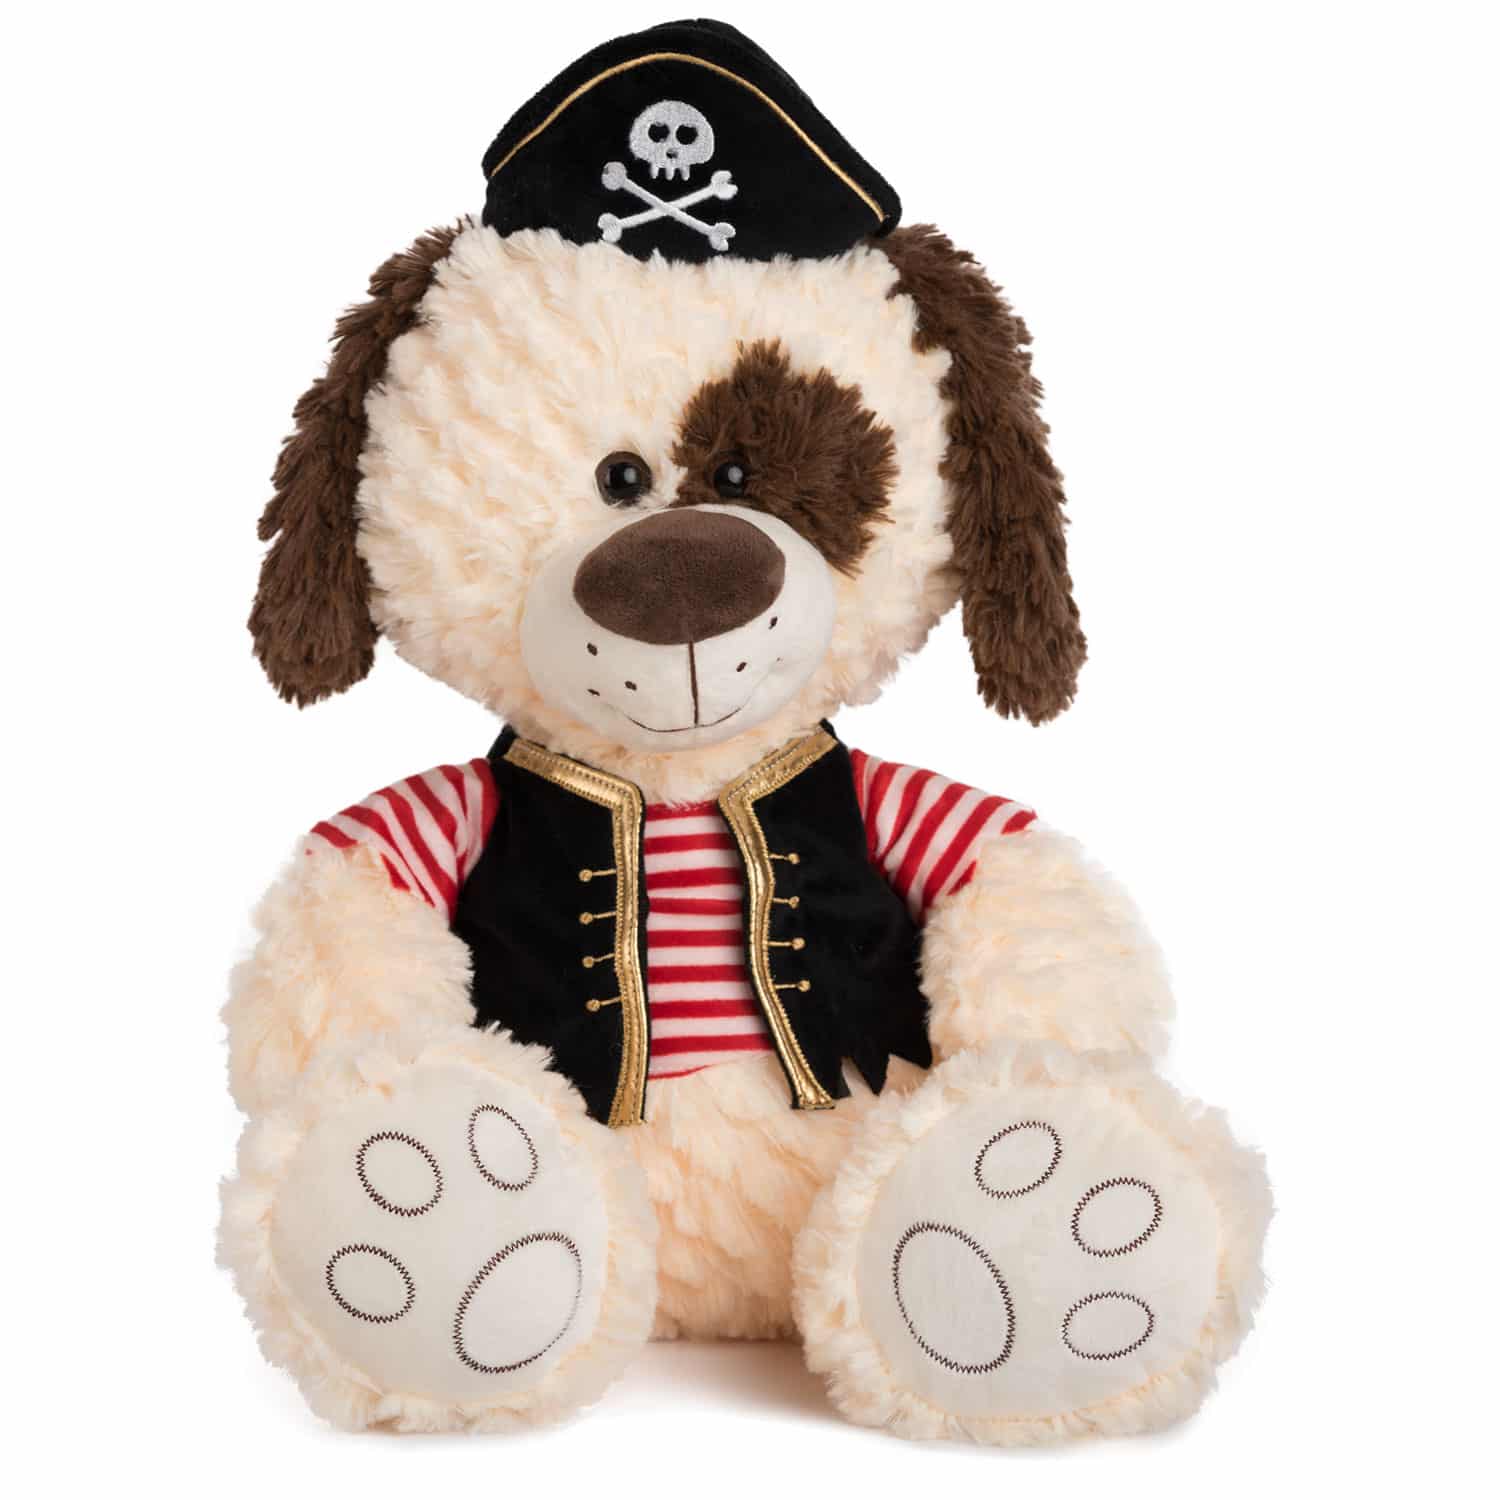 Pirate dog